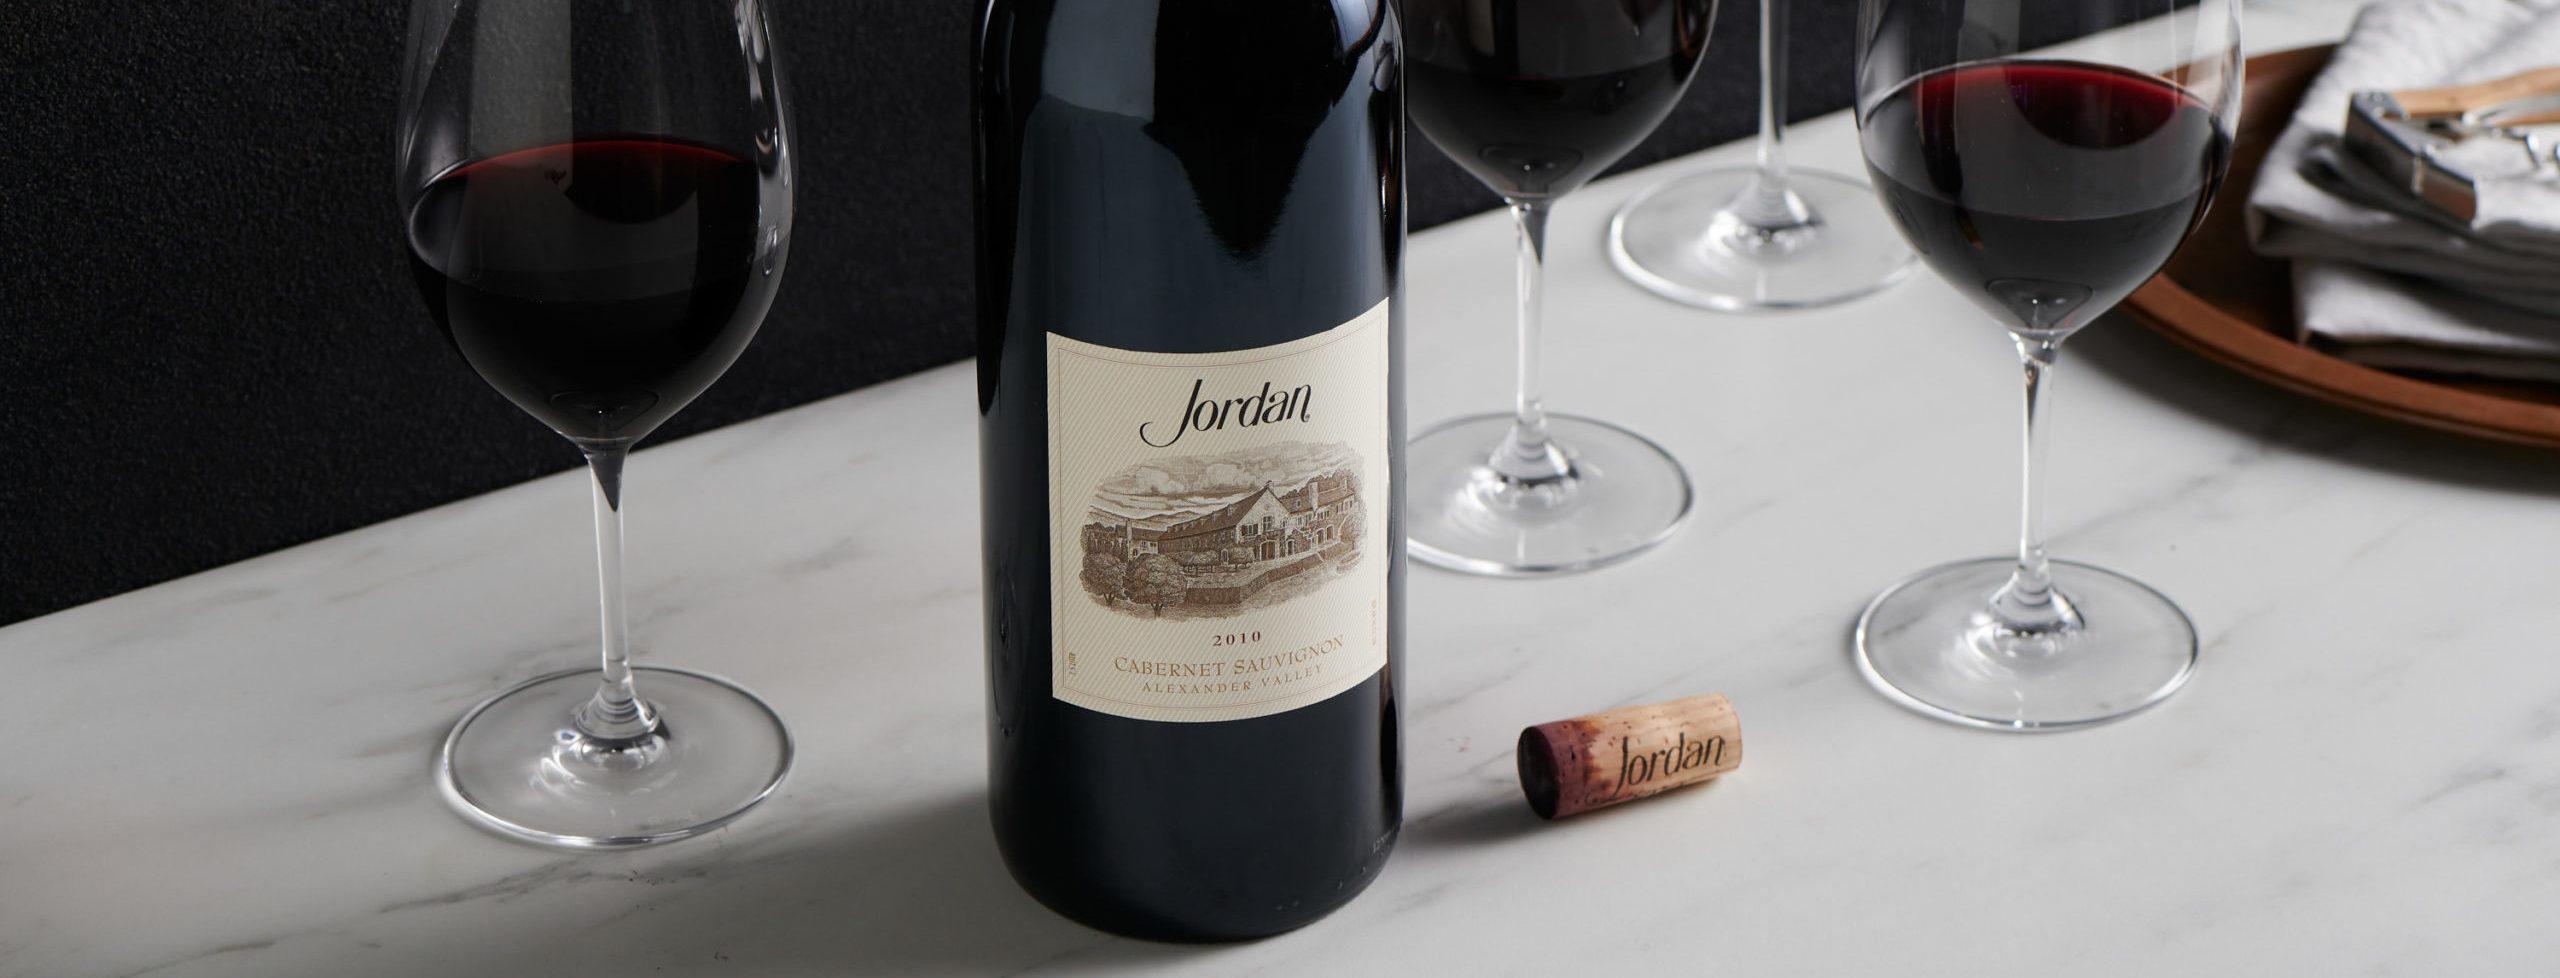 Bottle and glasses of Jordan Cabernet Sauvignon